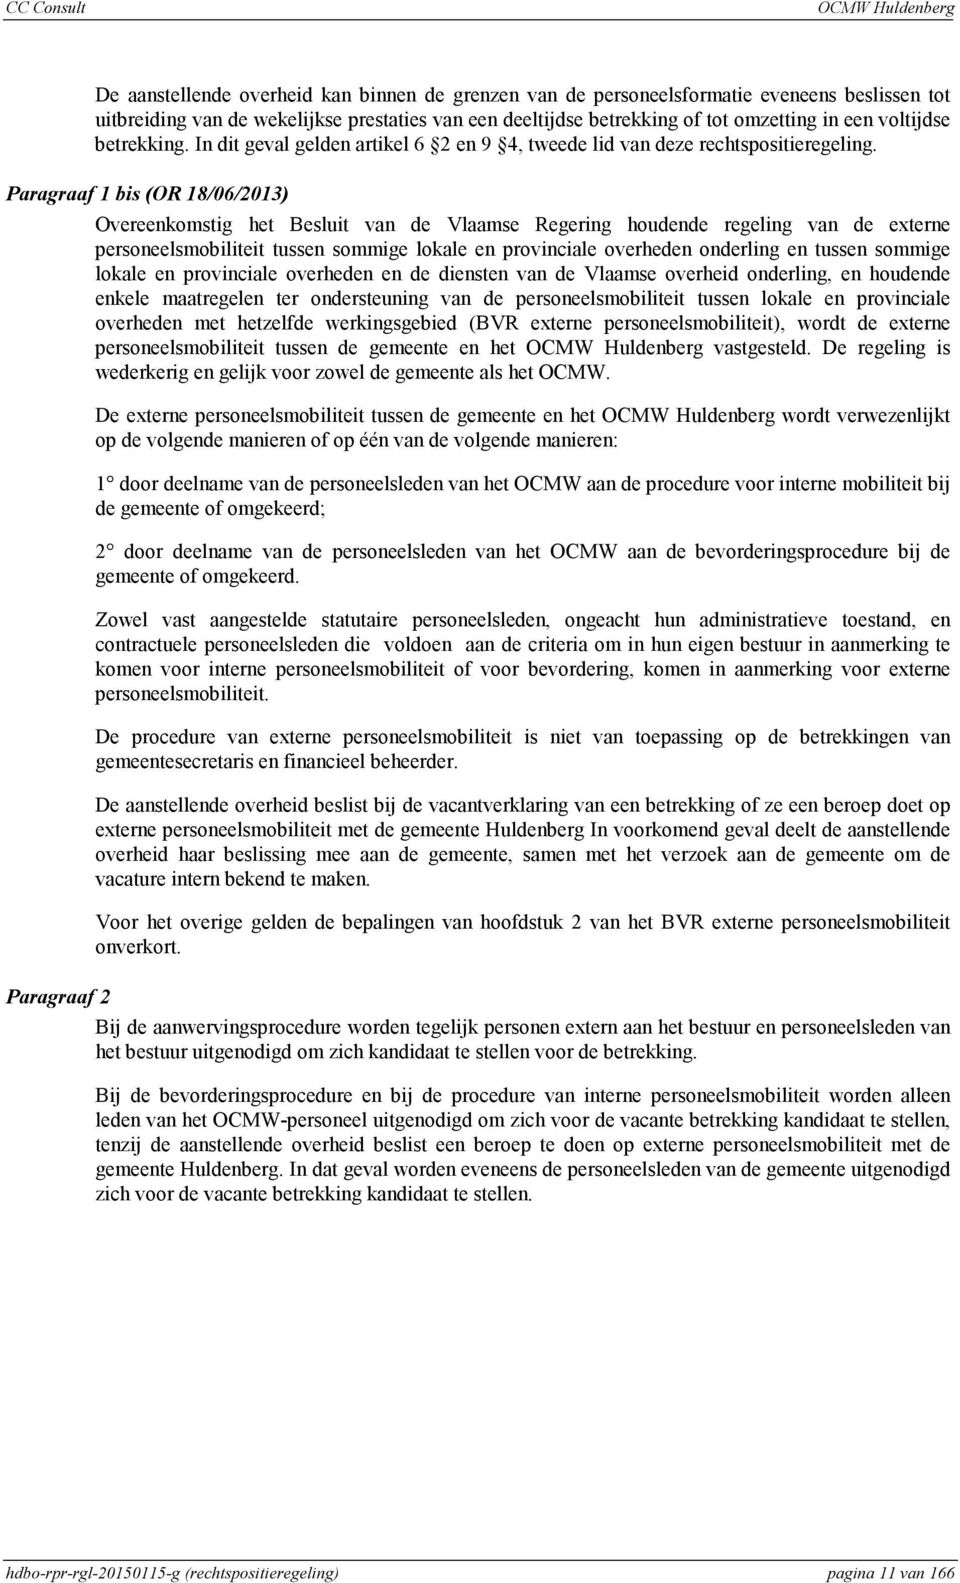 bis (OR 18/06/2013) Overeenkomstig het Besluit van de Vlaamse Regering houdende regeling van de externe personeelsmobiliteit tussen sommige lokale en provinciale overheden onderling en tussen sommige